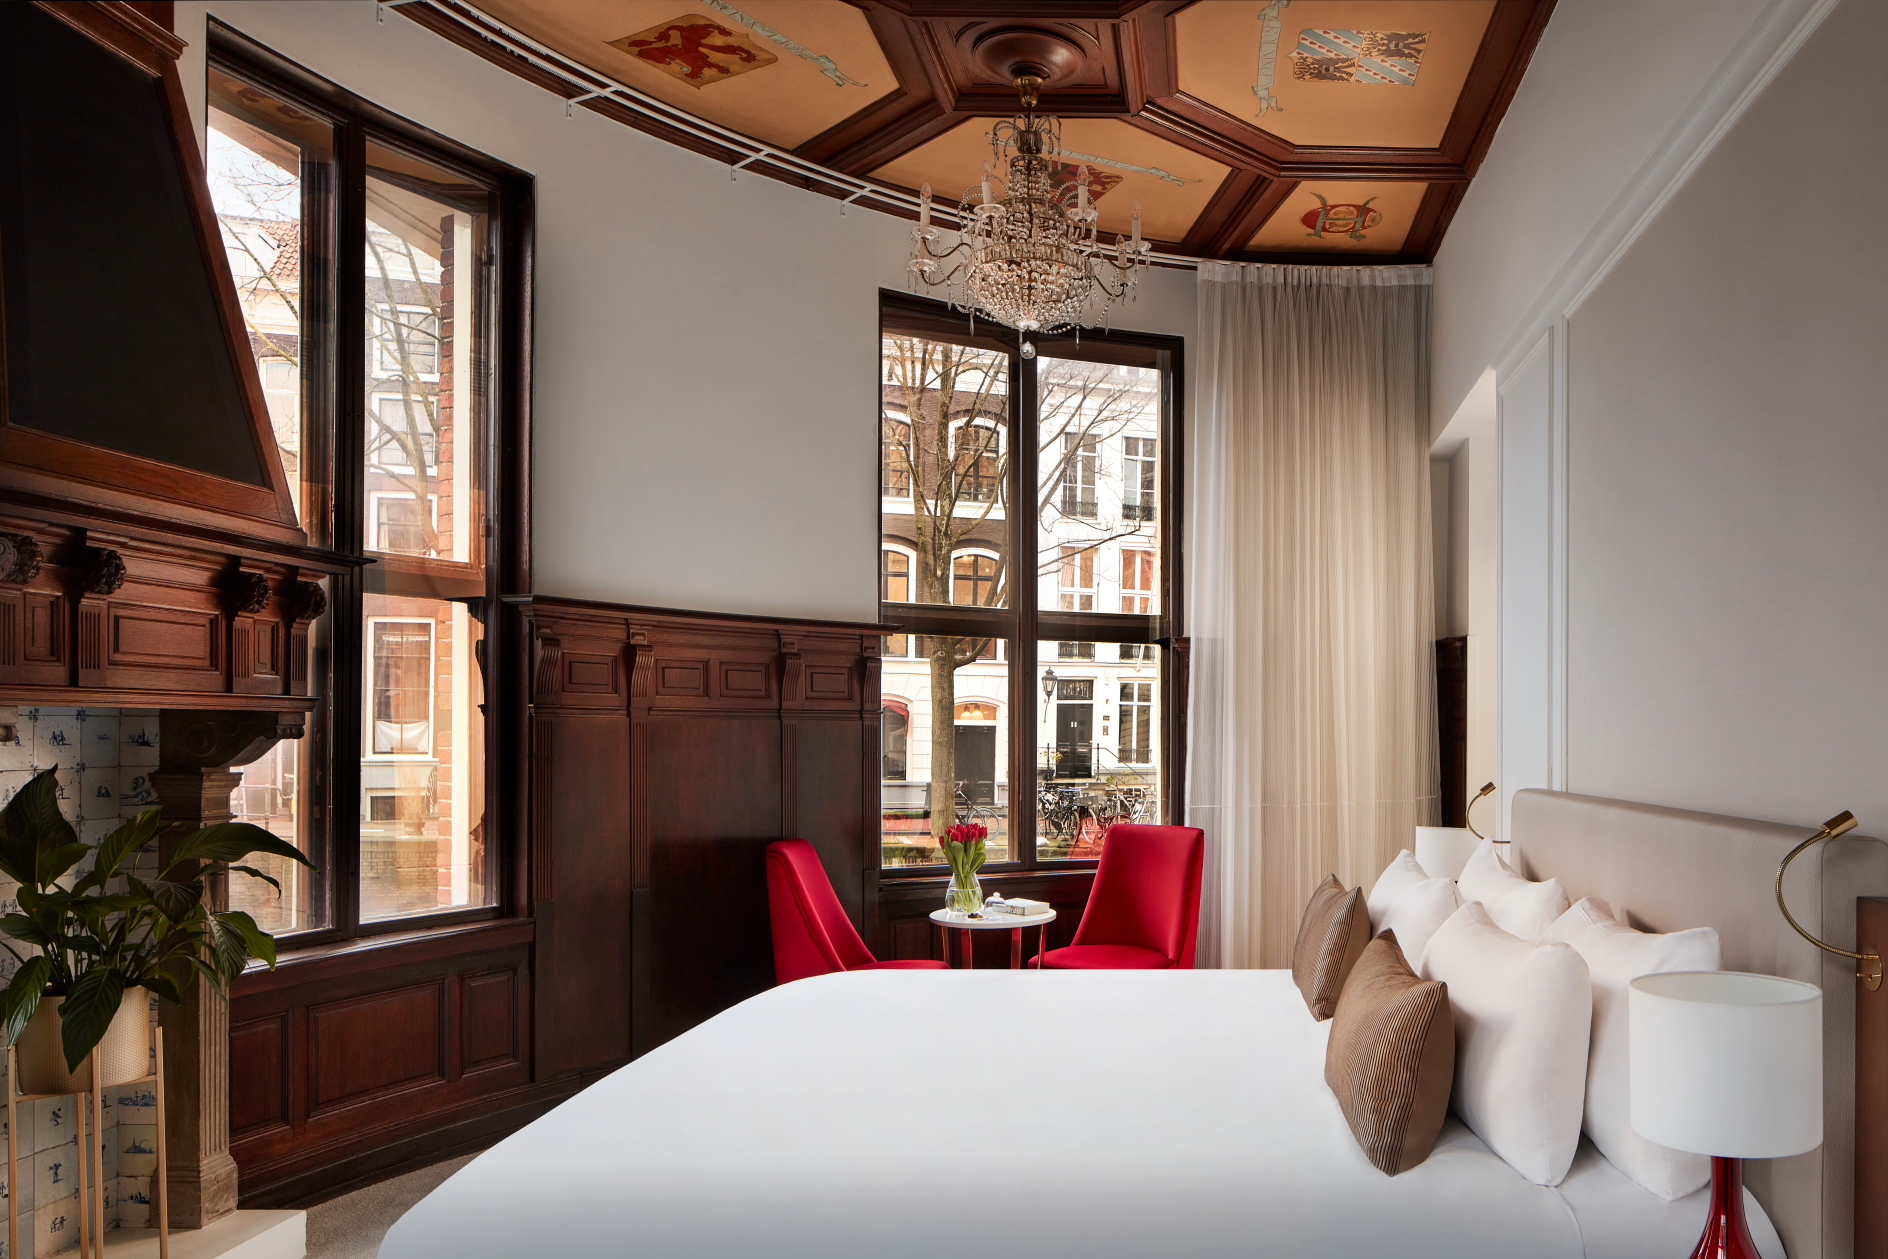 Empress Suite at the Tivoli Doelen Amsterdam Hotel in Netherlands. Click to enlarge.